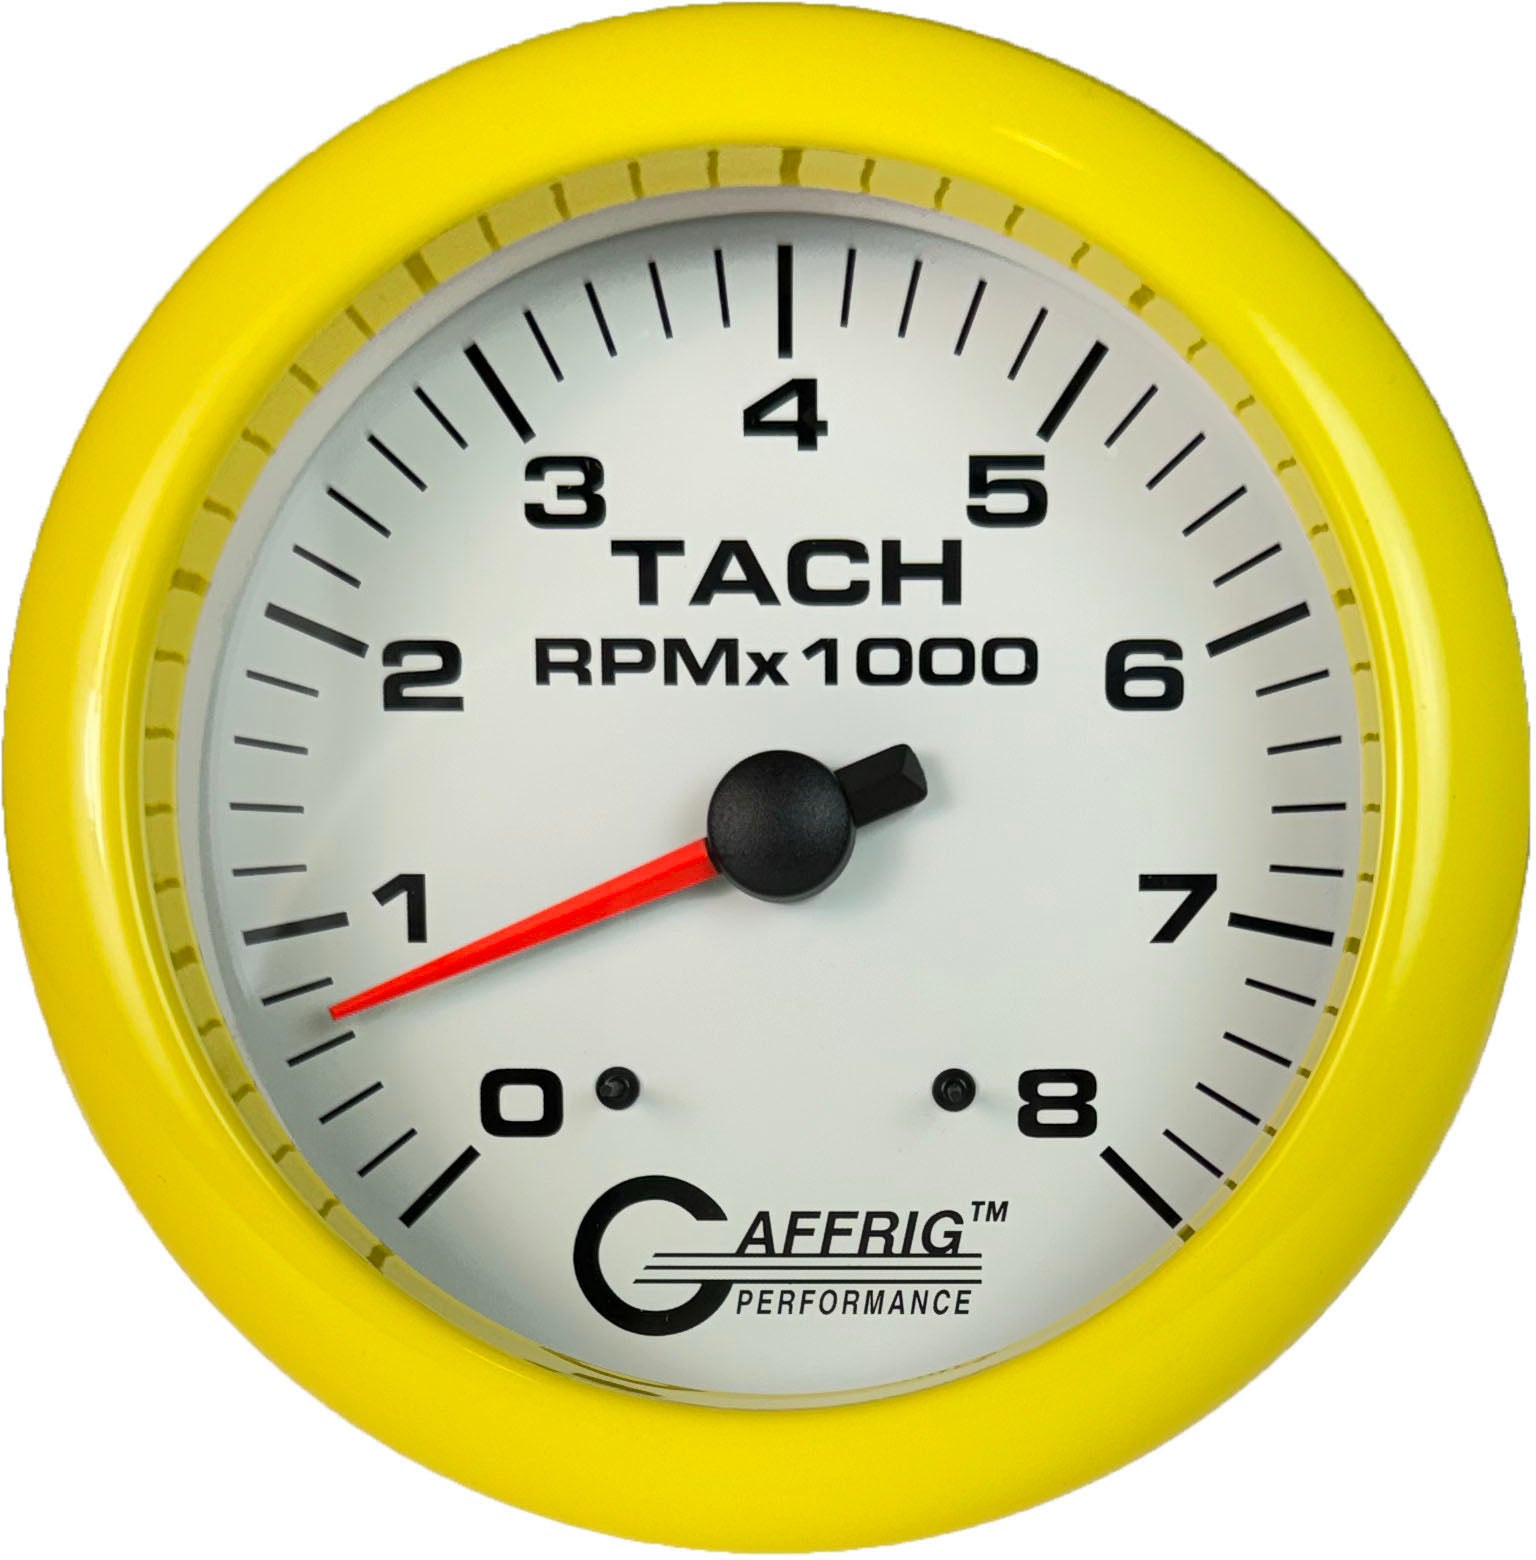 GAFFRIG PART #10019 4 5/8 INCH ELECTRIC TACHOMETER GAUGE 0-8000 RPM WHITE YELLOW